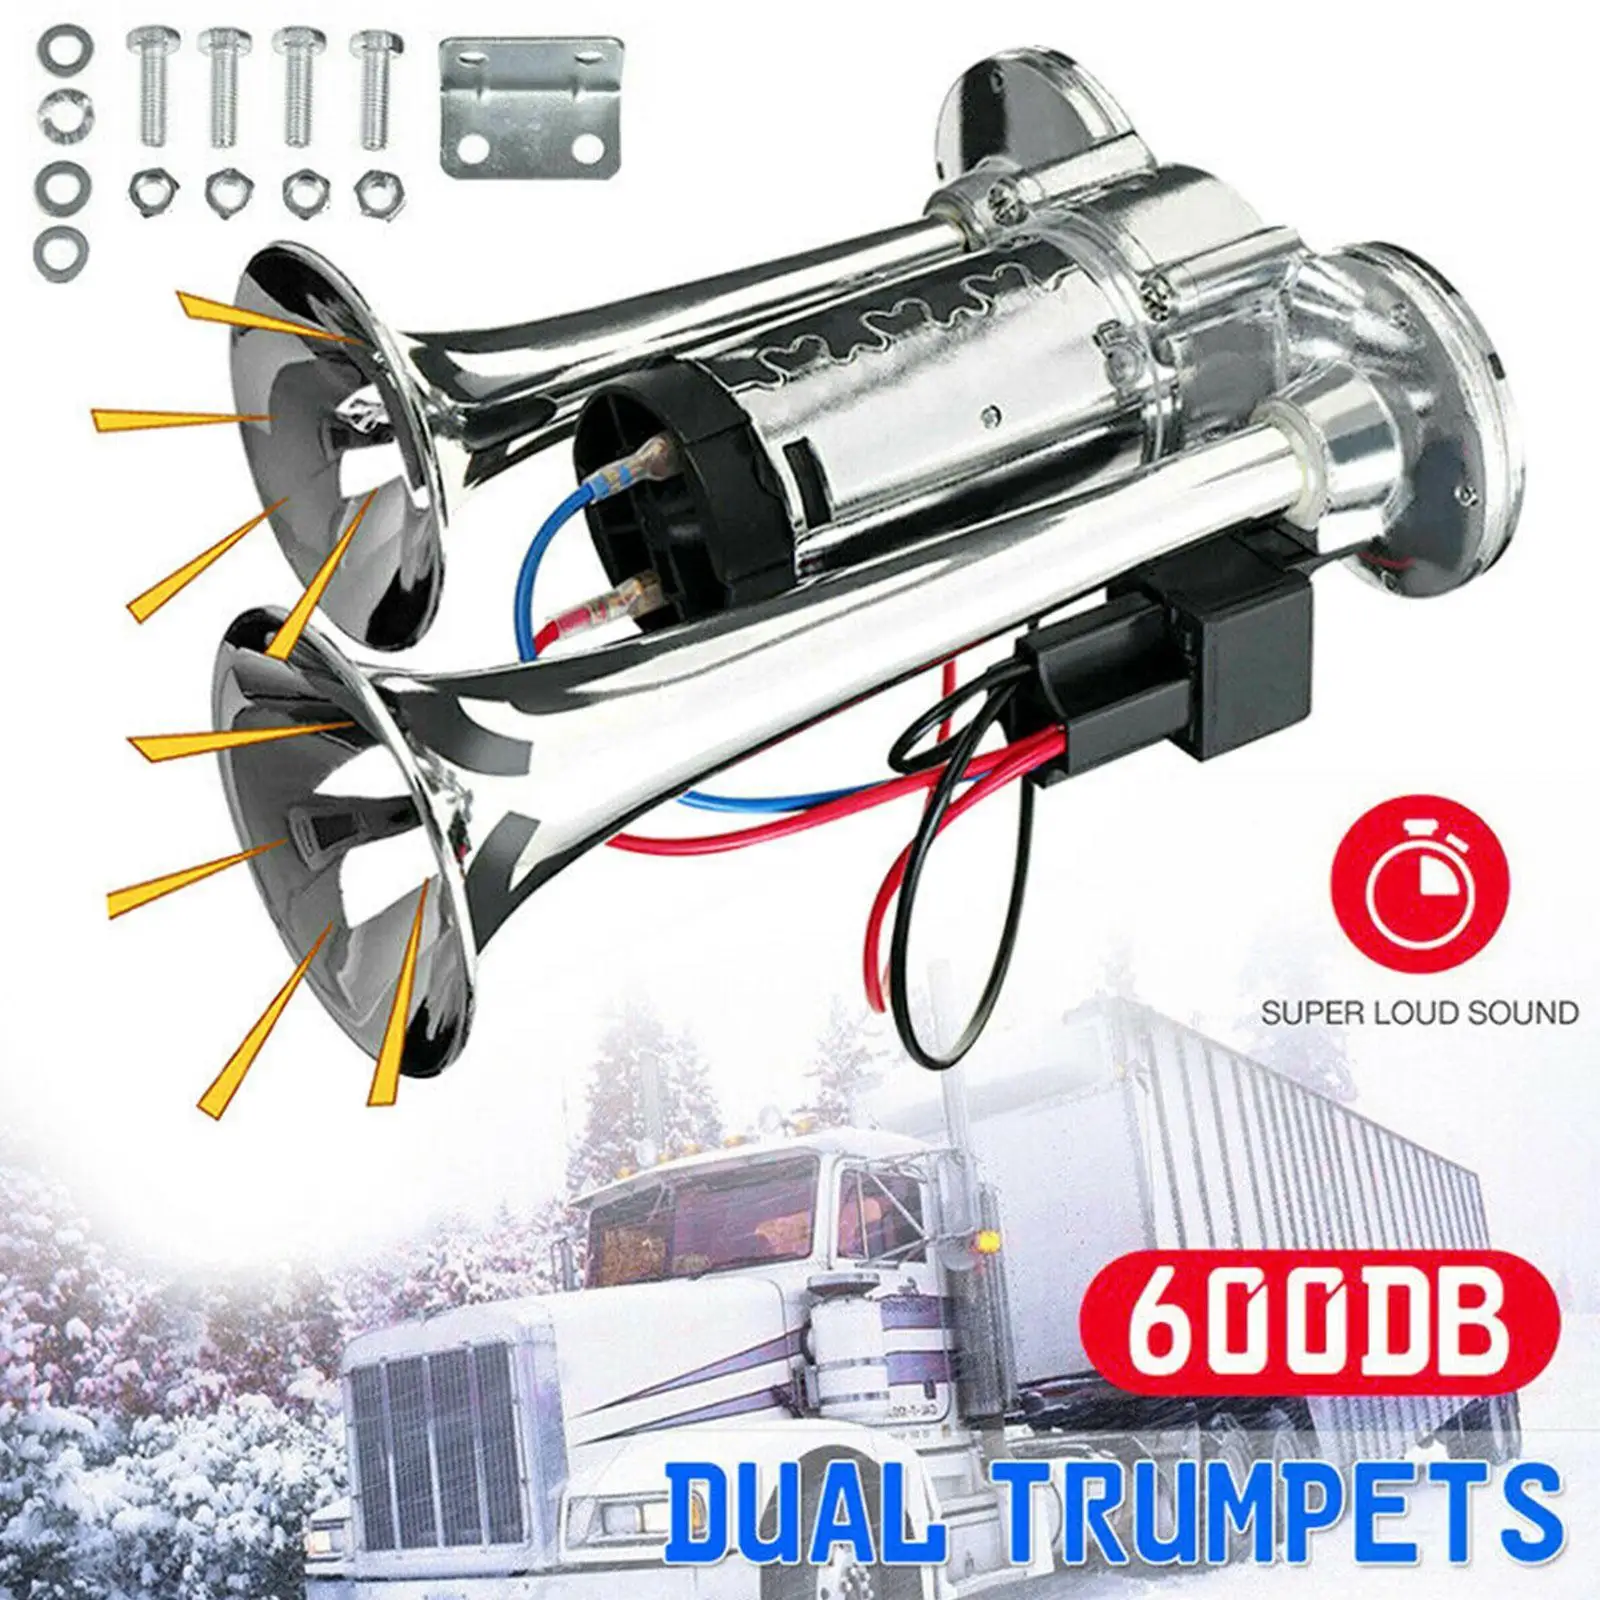 600DB 12V Dual แตร Super Loud ไฟฟ้าวาล์วน้ำรถ Electric Air Horn ลำโพงสำหรับรถยนต์ SUV รถบรรทุกรถบรรทุก RV เรือ